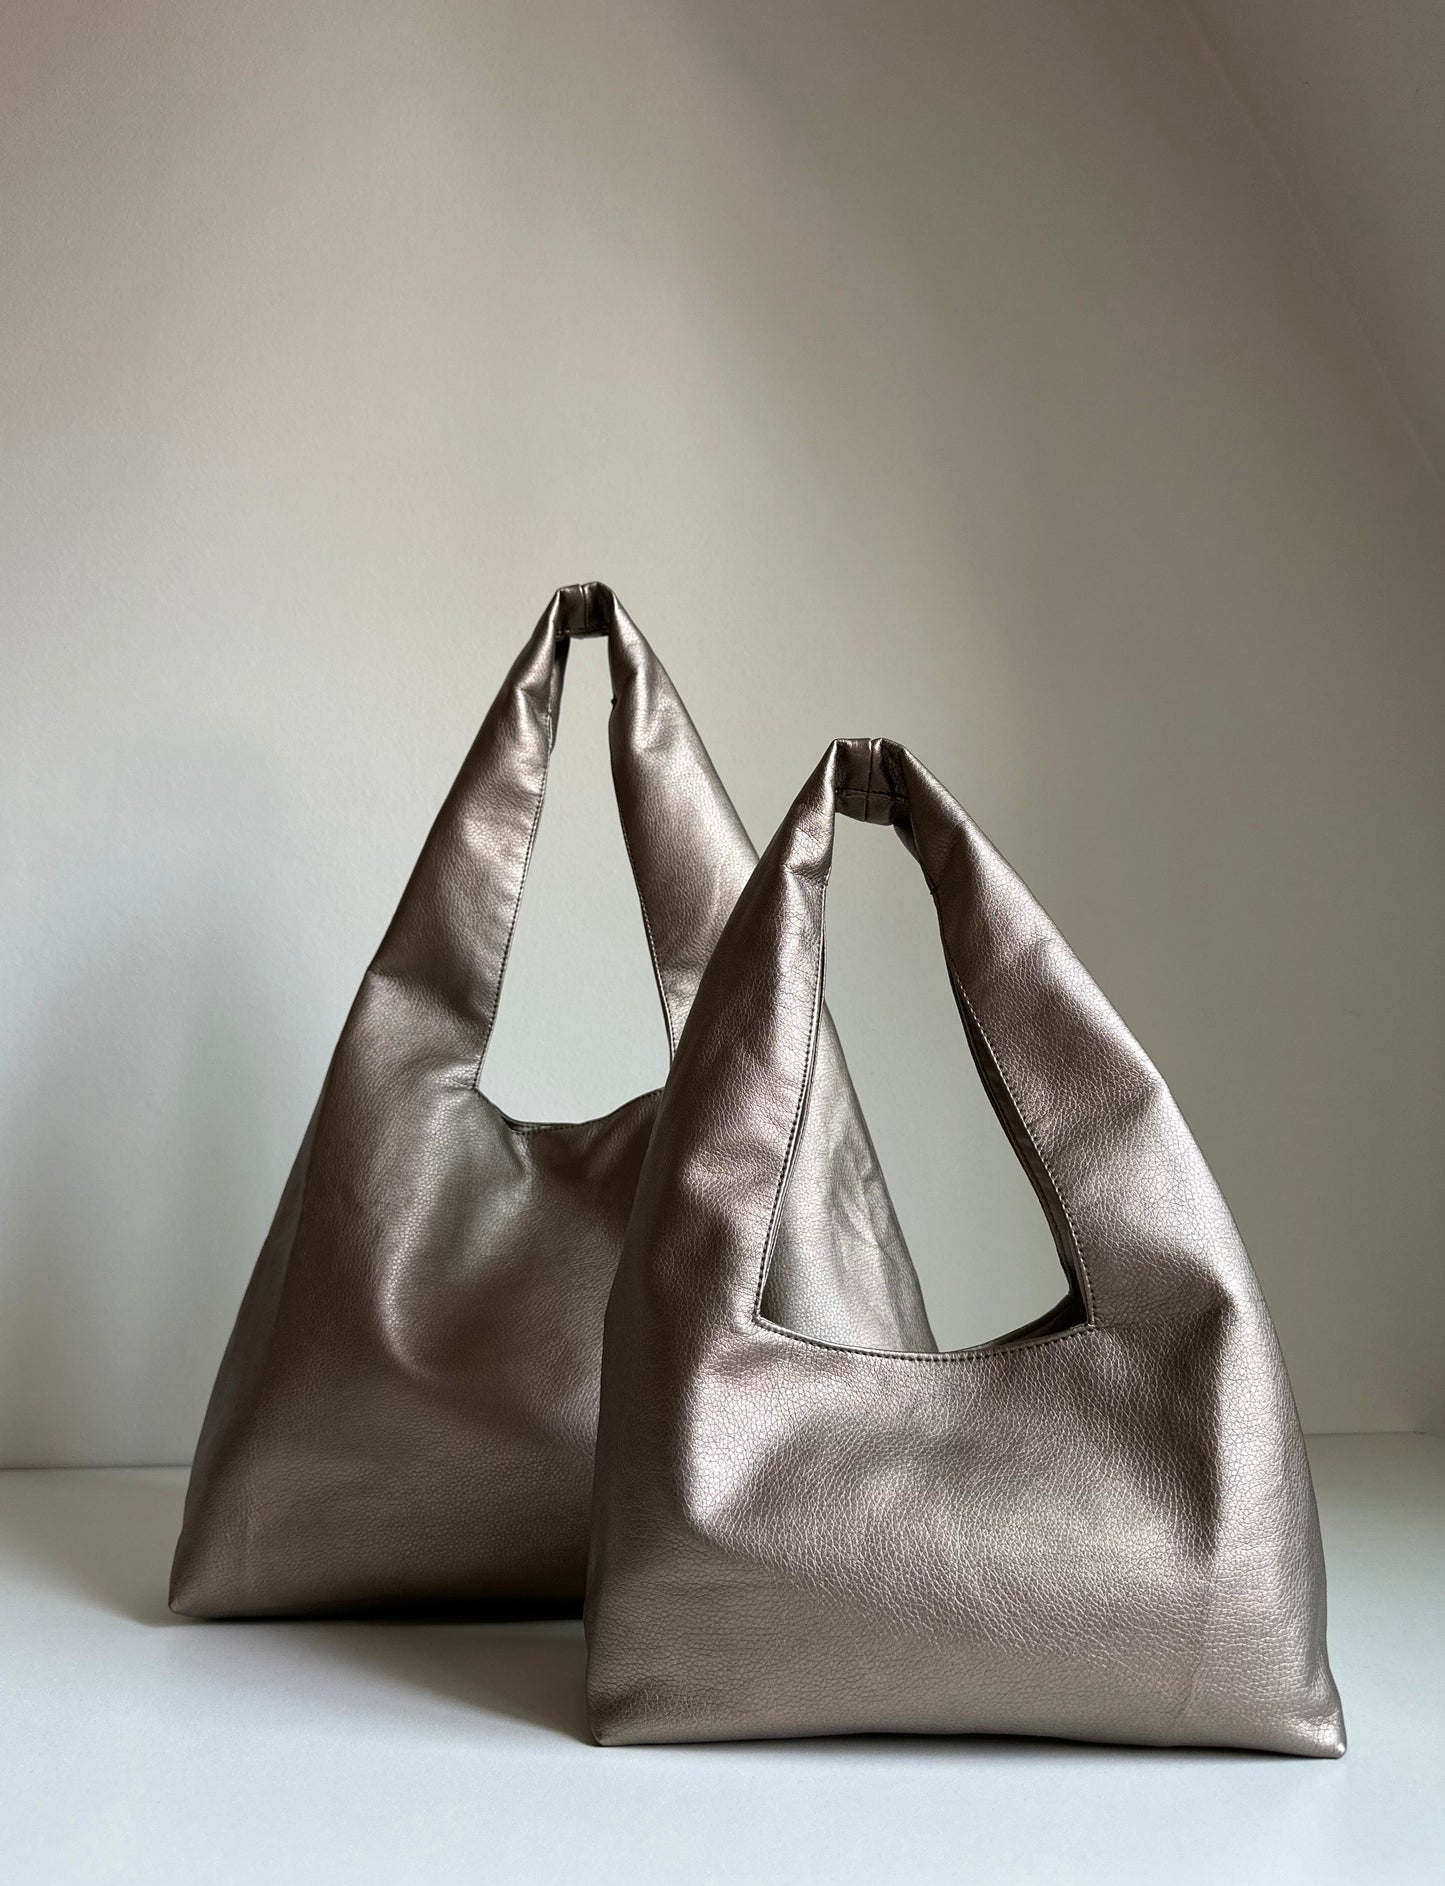 Marlisa Strauss Triangle Bag Bronze